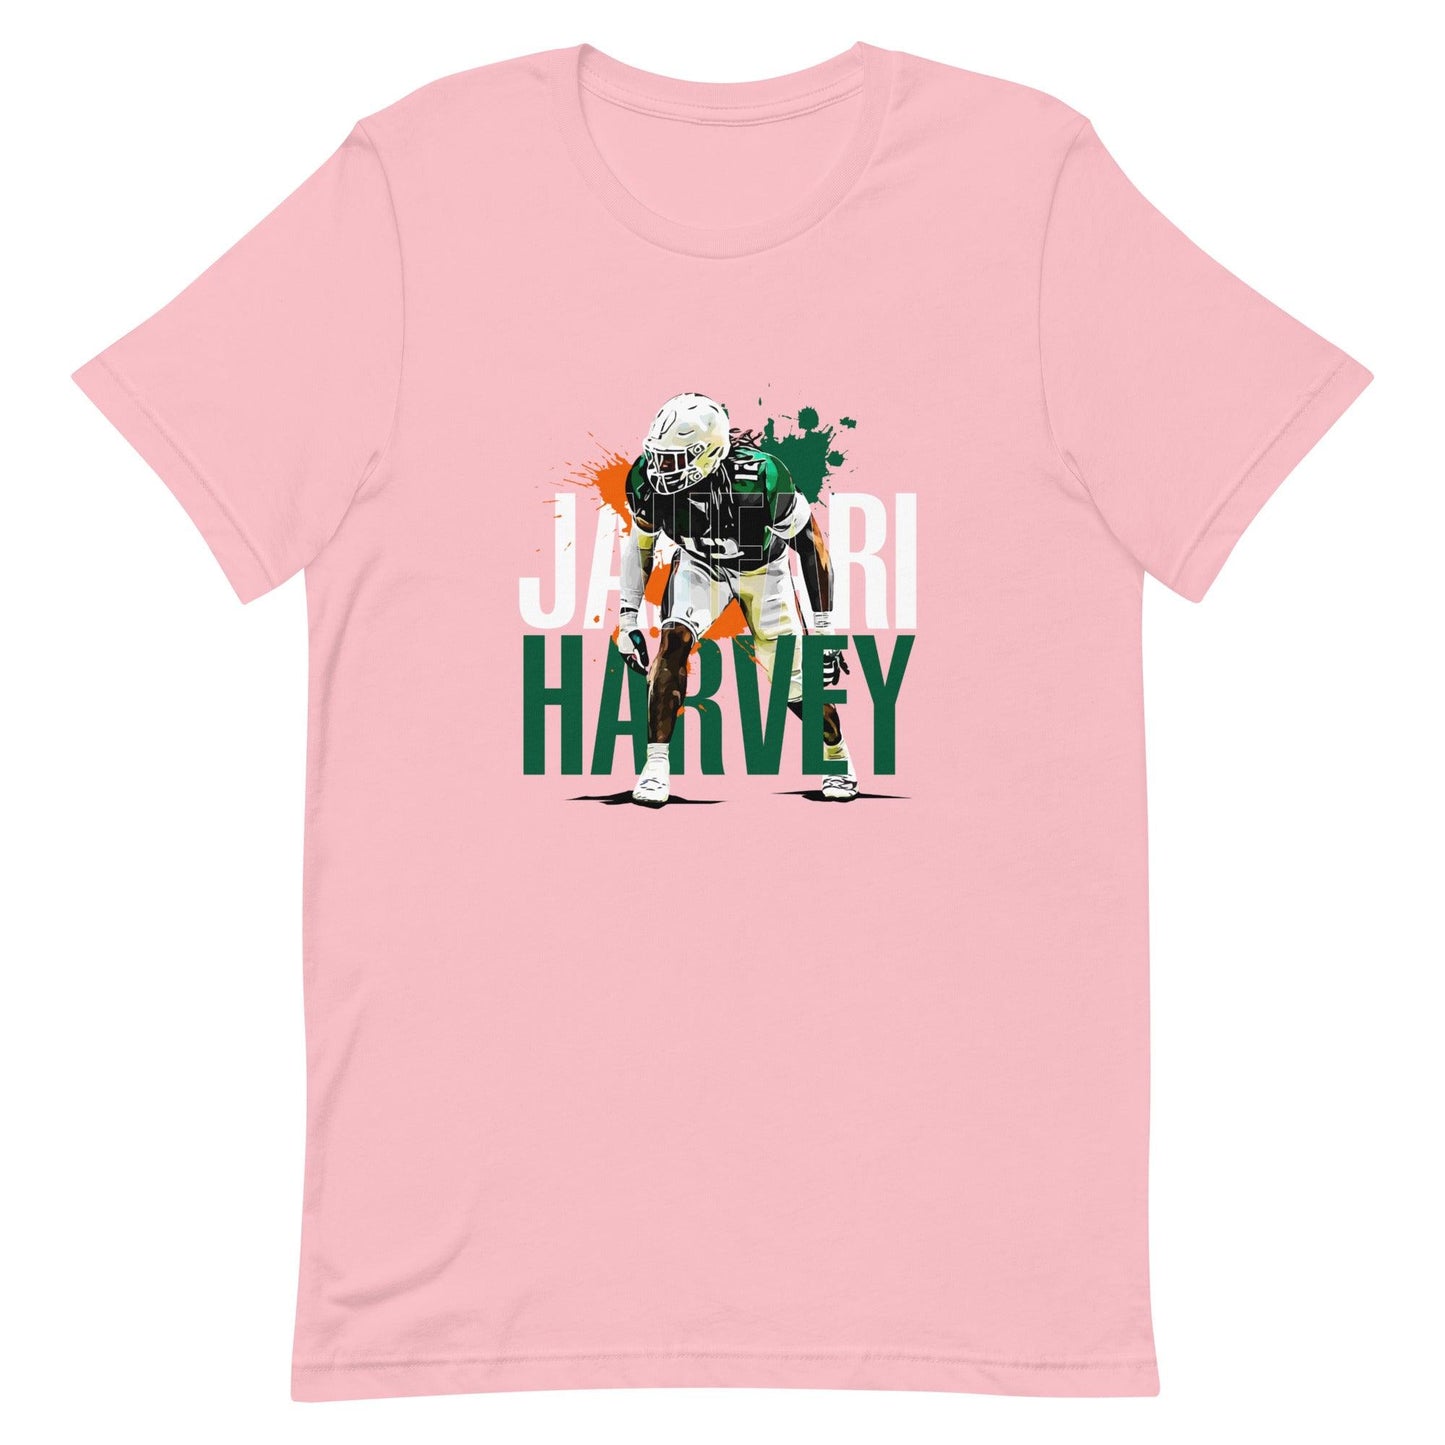 Jahfari Harvey "Stay Ready" t-shirt - Fan Arch